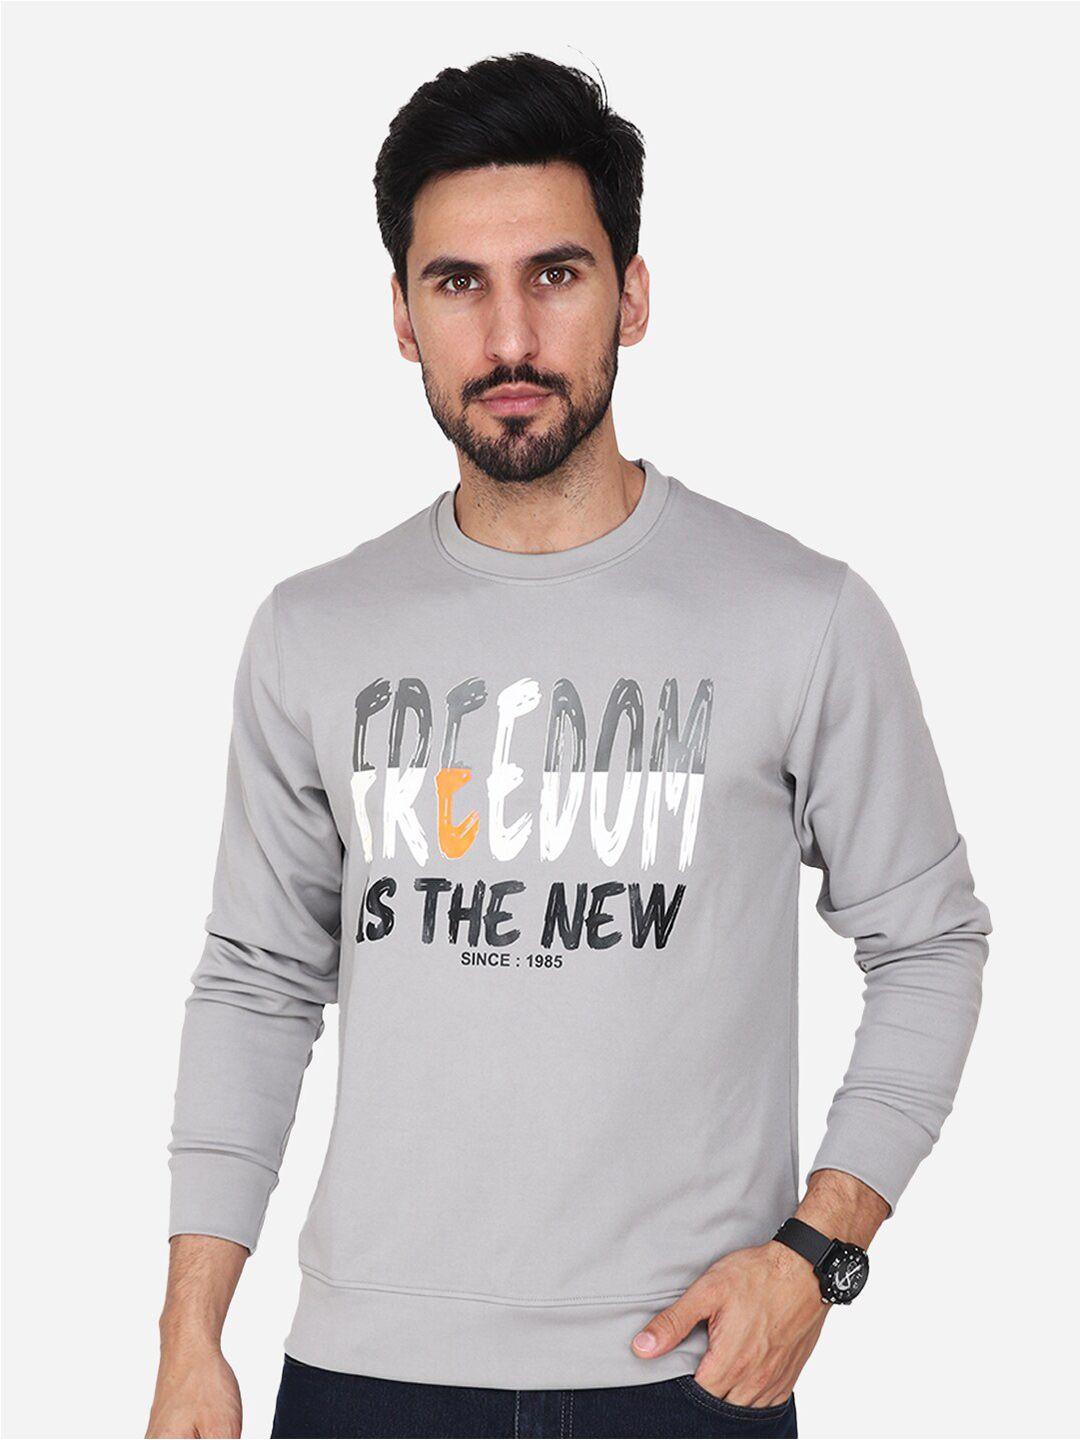 albion typography printed round neck cotton sweatshirt